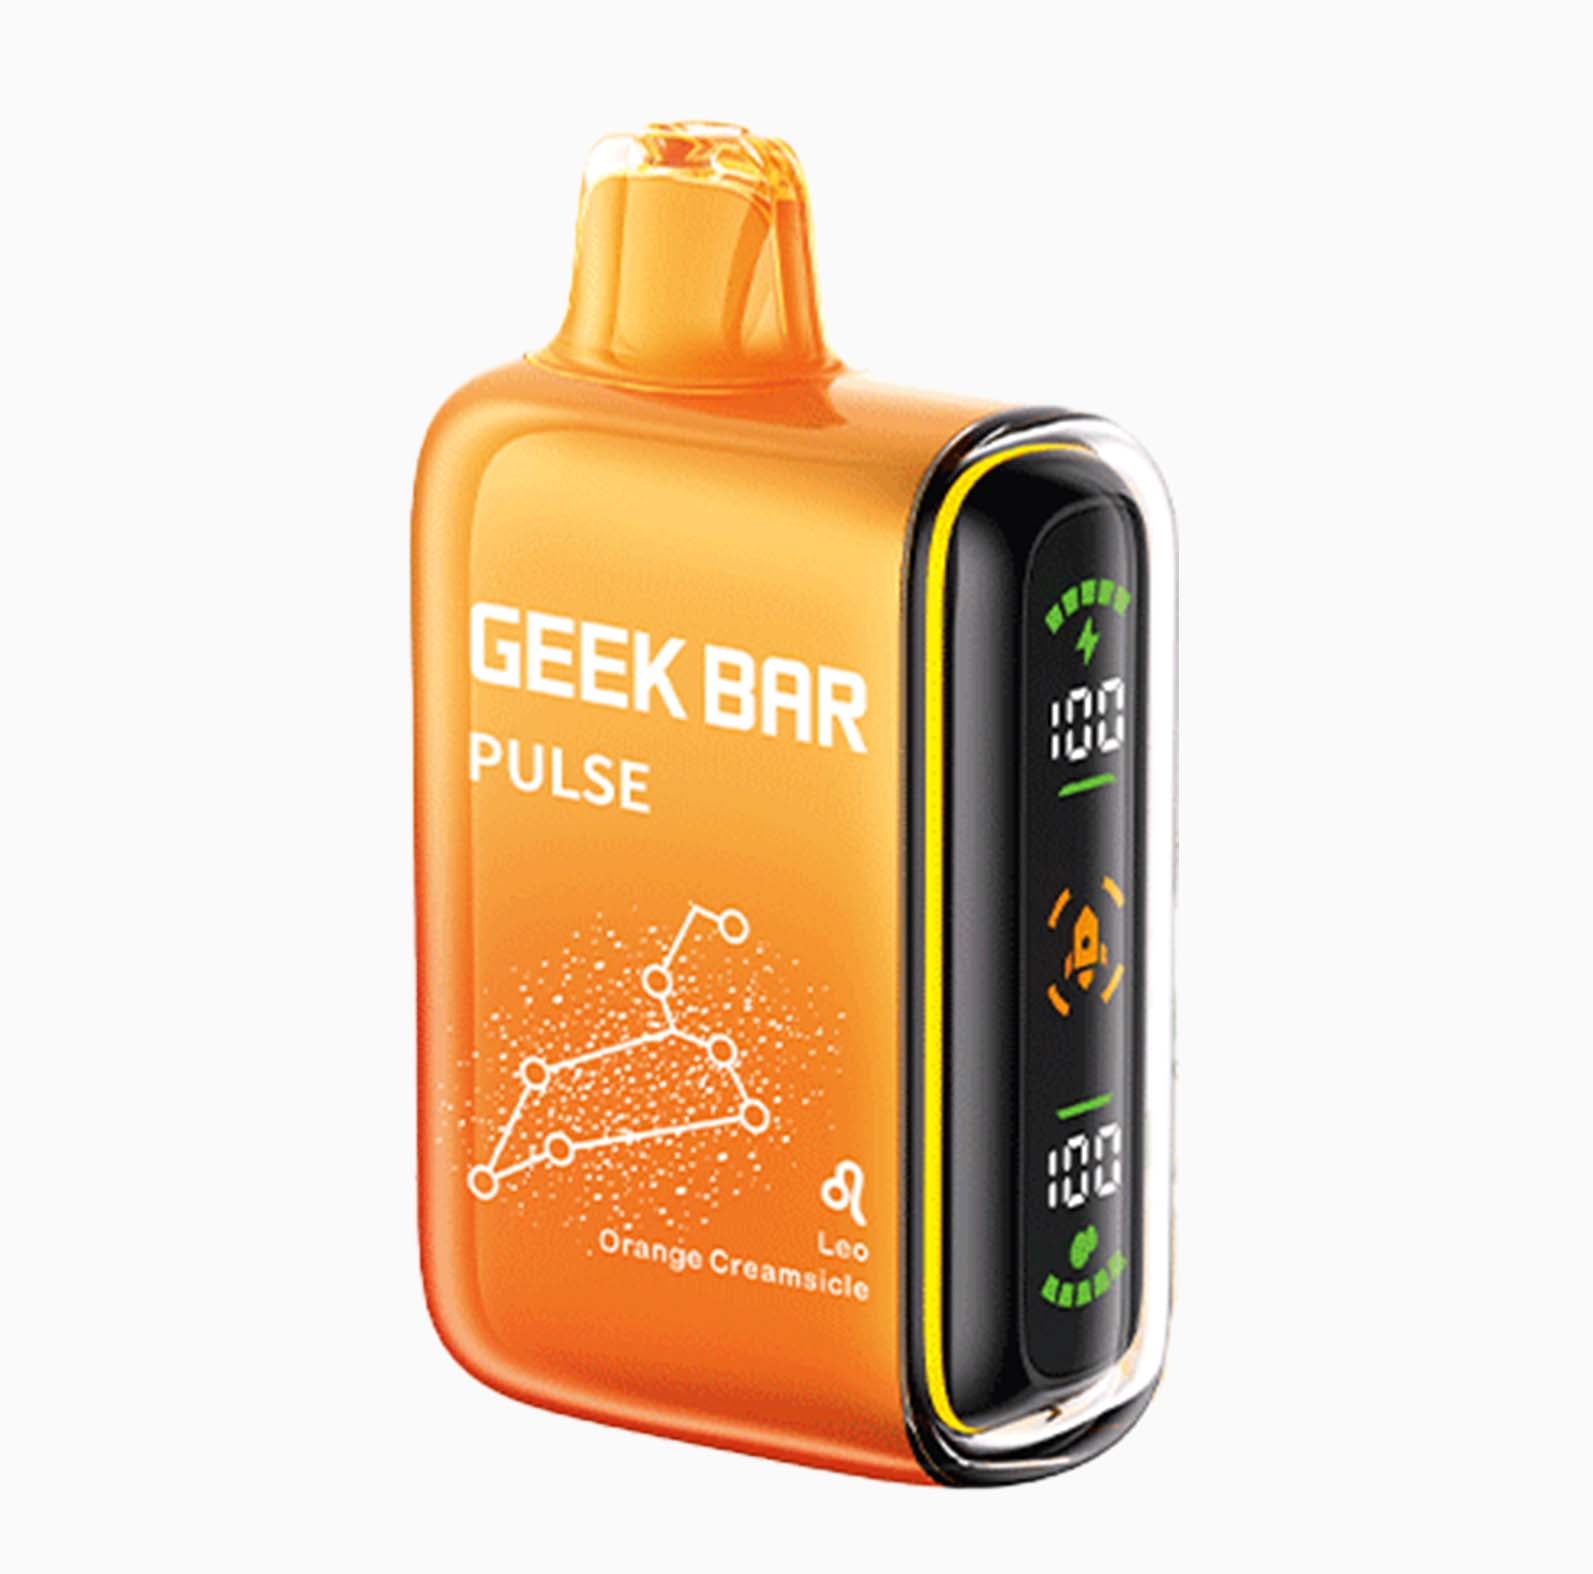 Geek Bar Pulse - Leo Orange Creamsicle